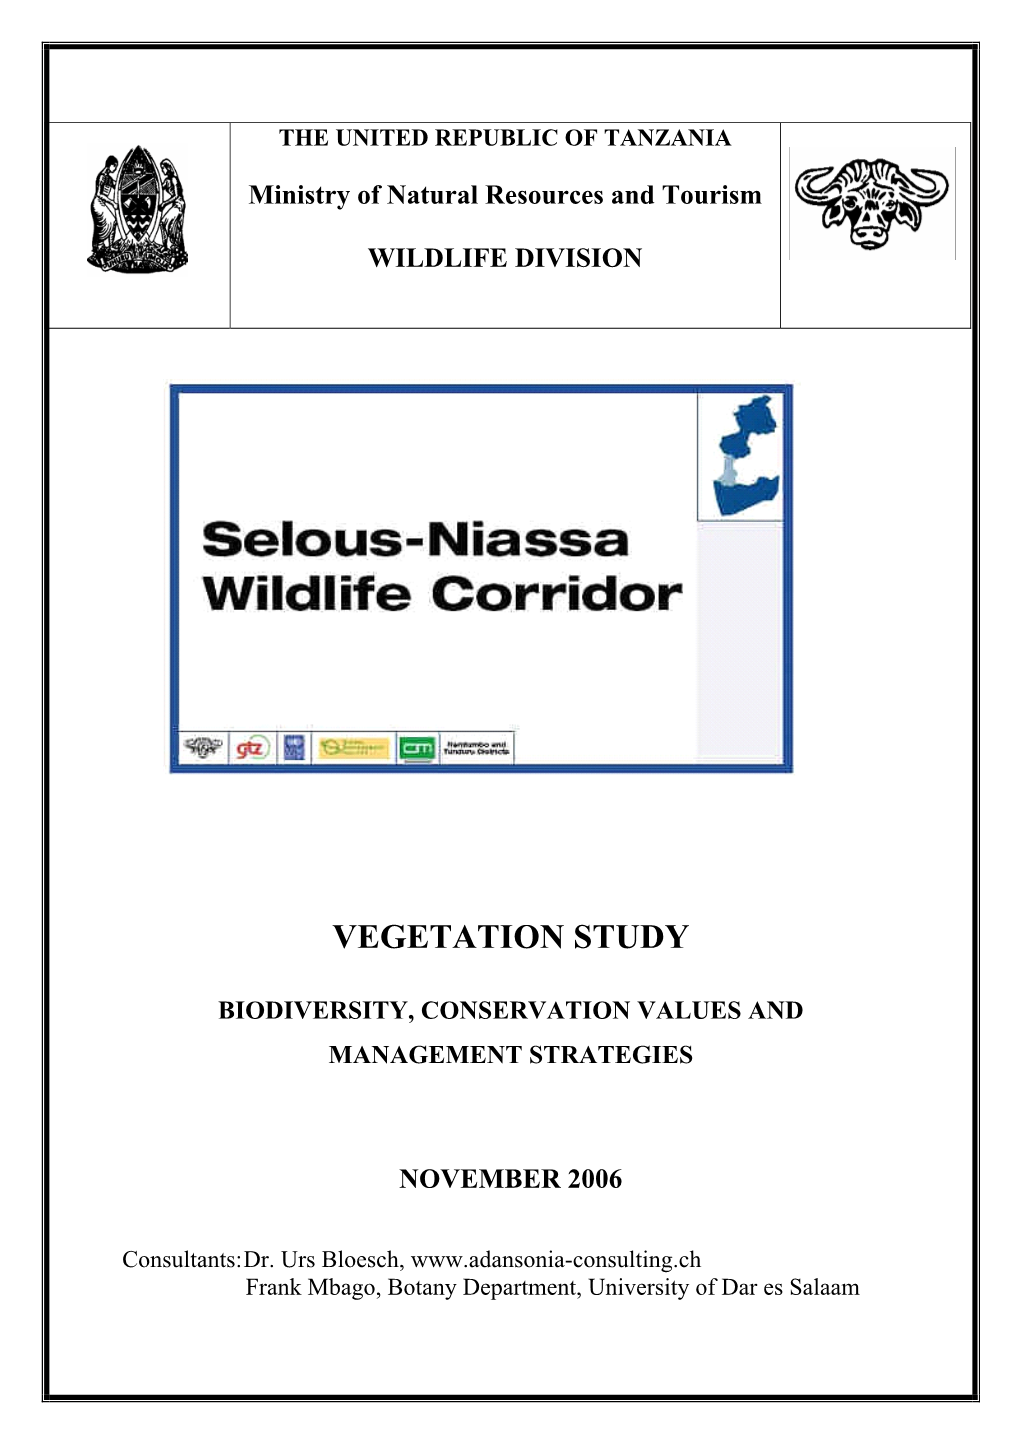 Preliminary Vegetation Study of the Selous-Niassa Wildlife Corridor